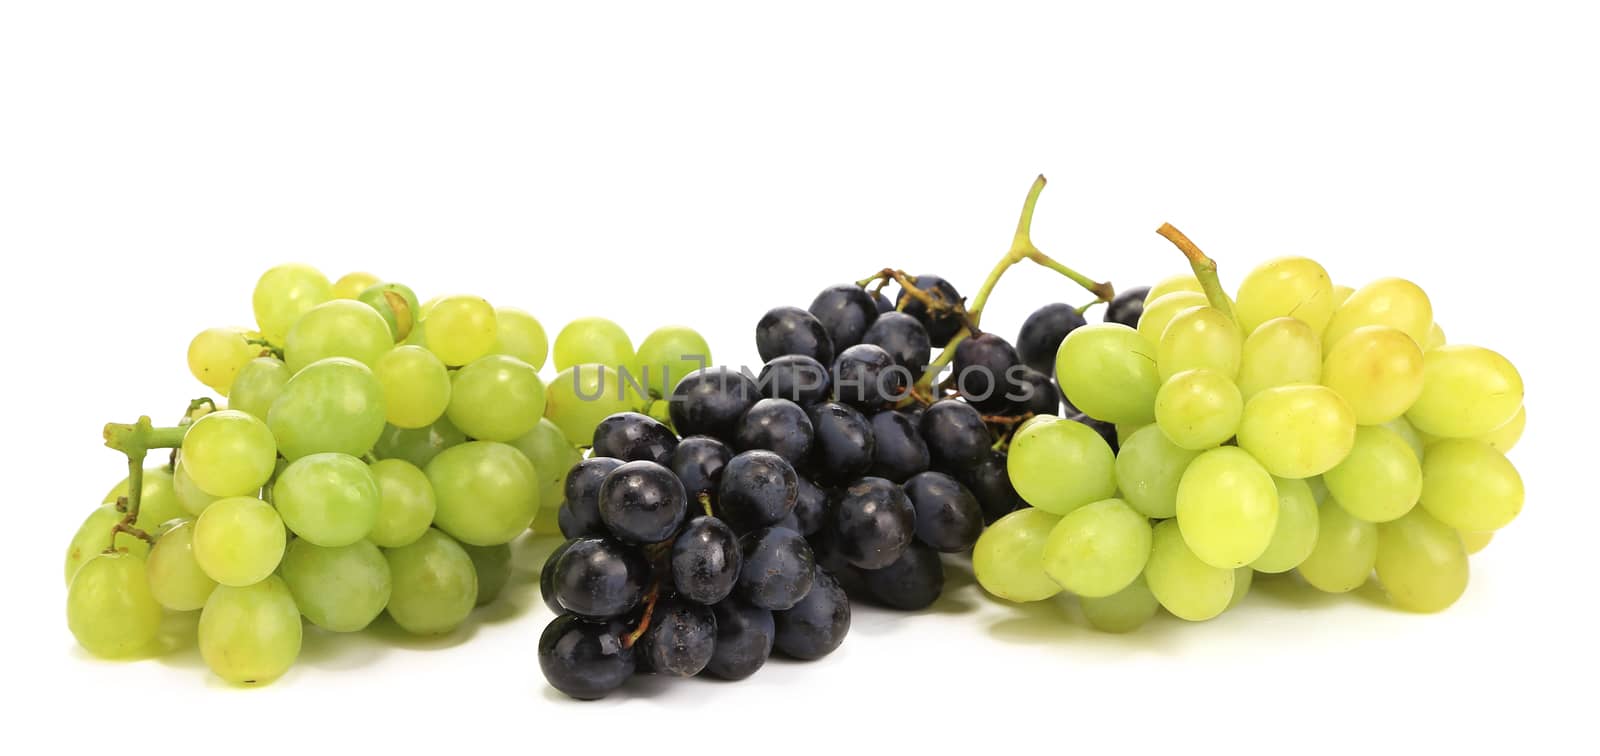 Black and green ripe grapes. by indigolotos